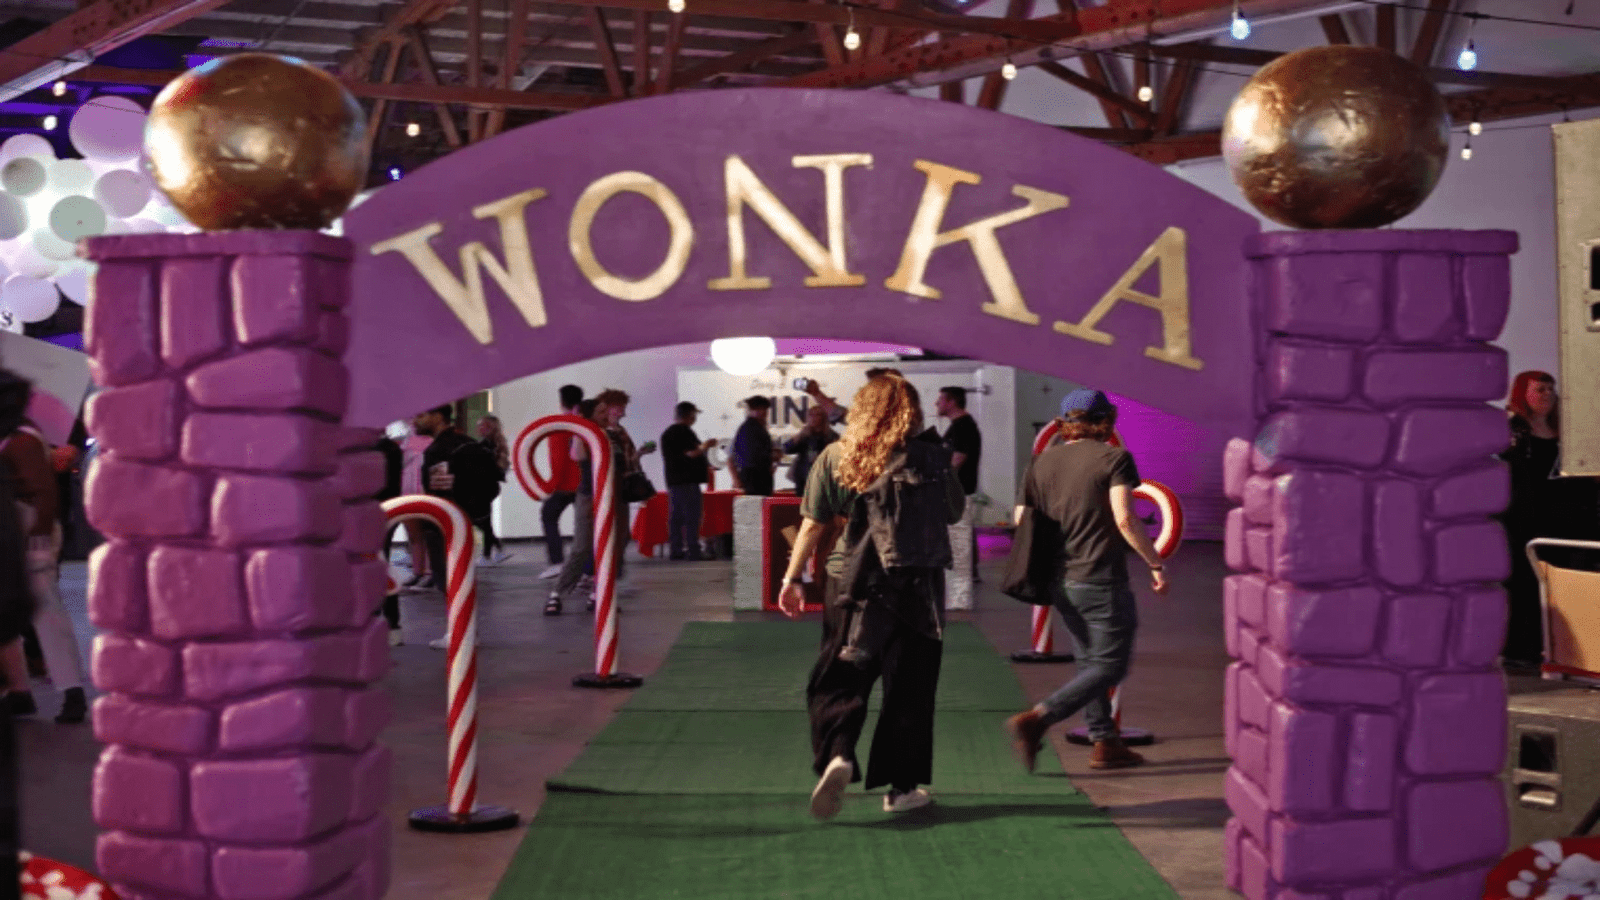 Wonka-inspired experience in LA slammed